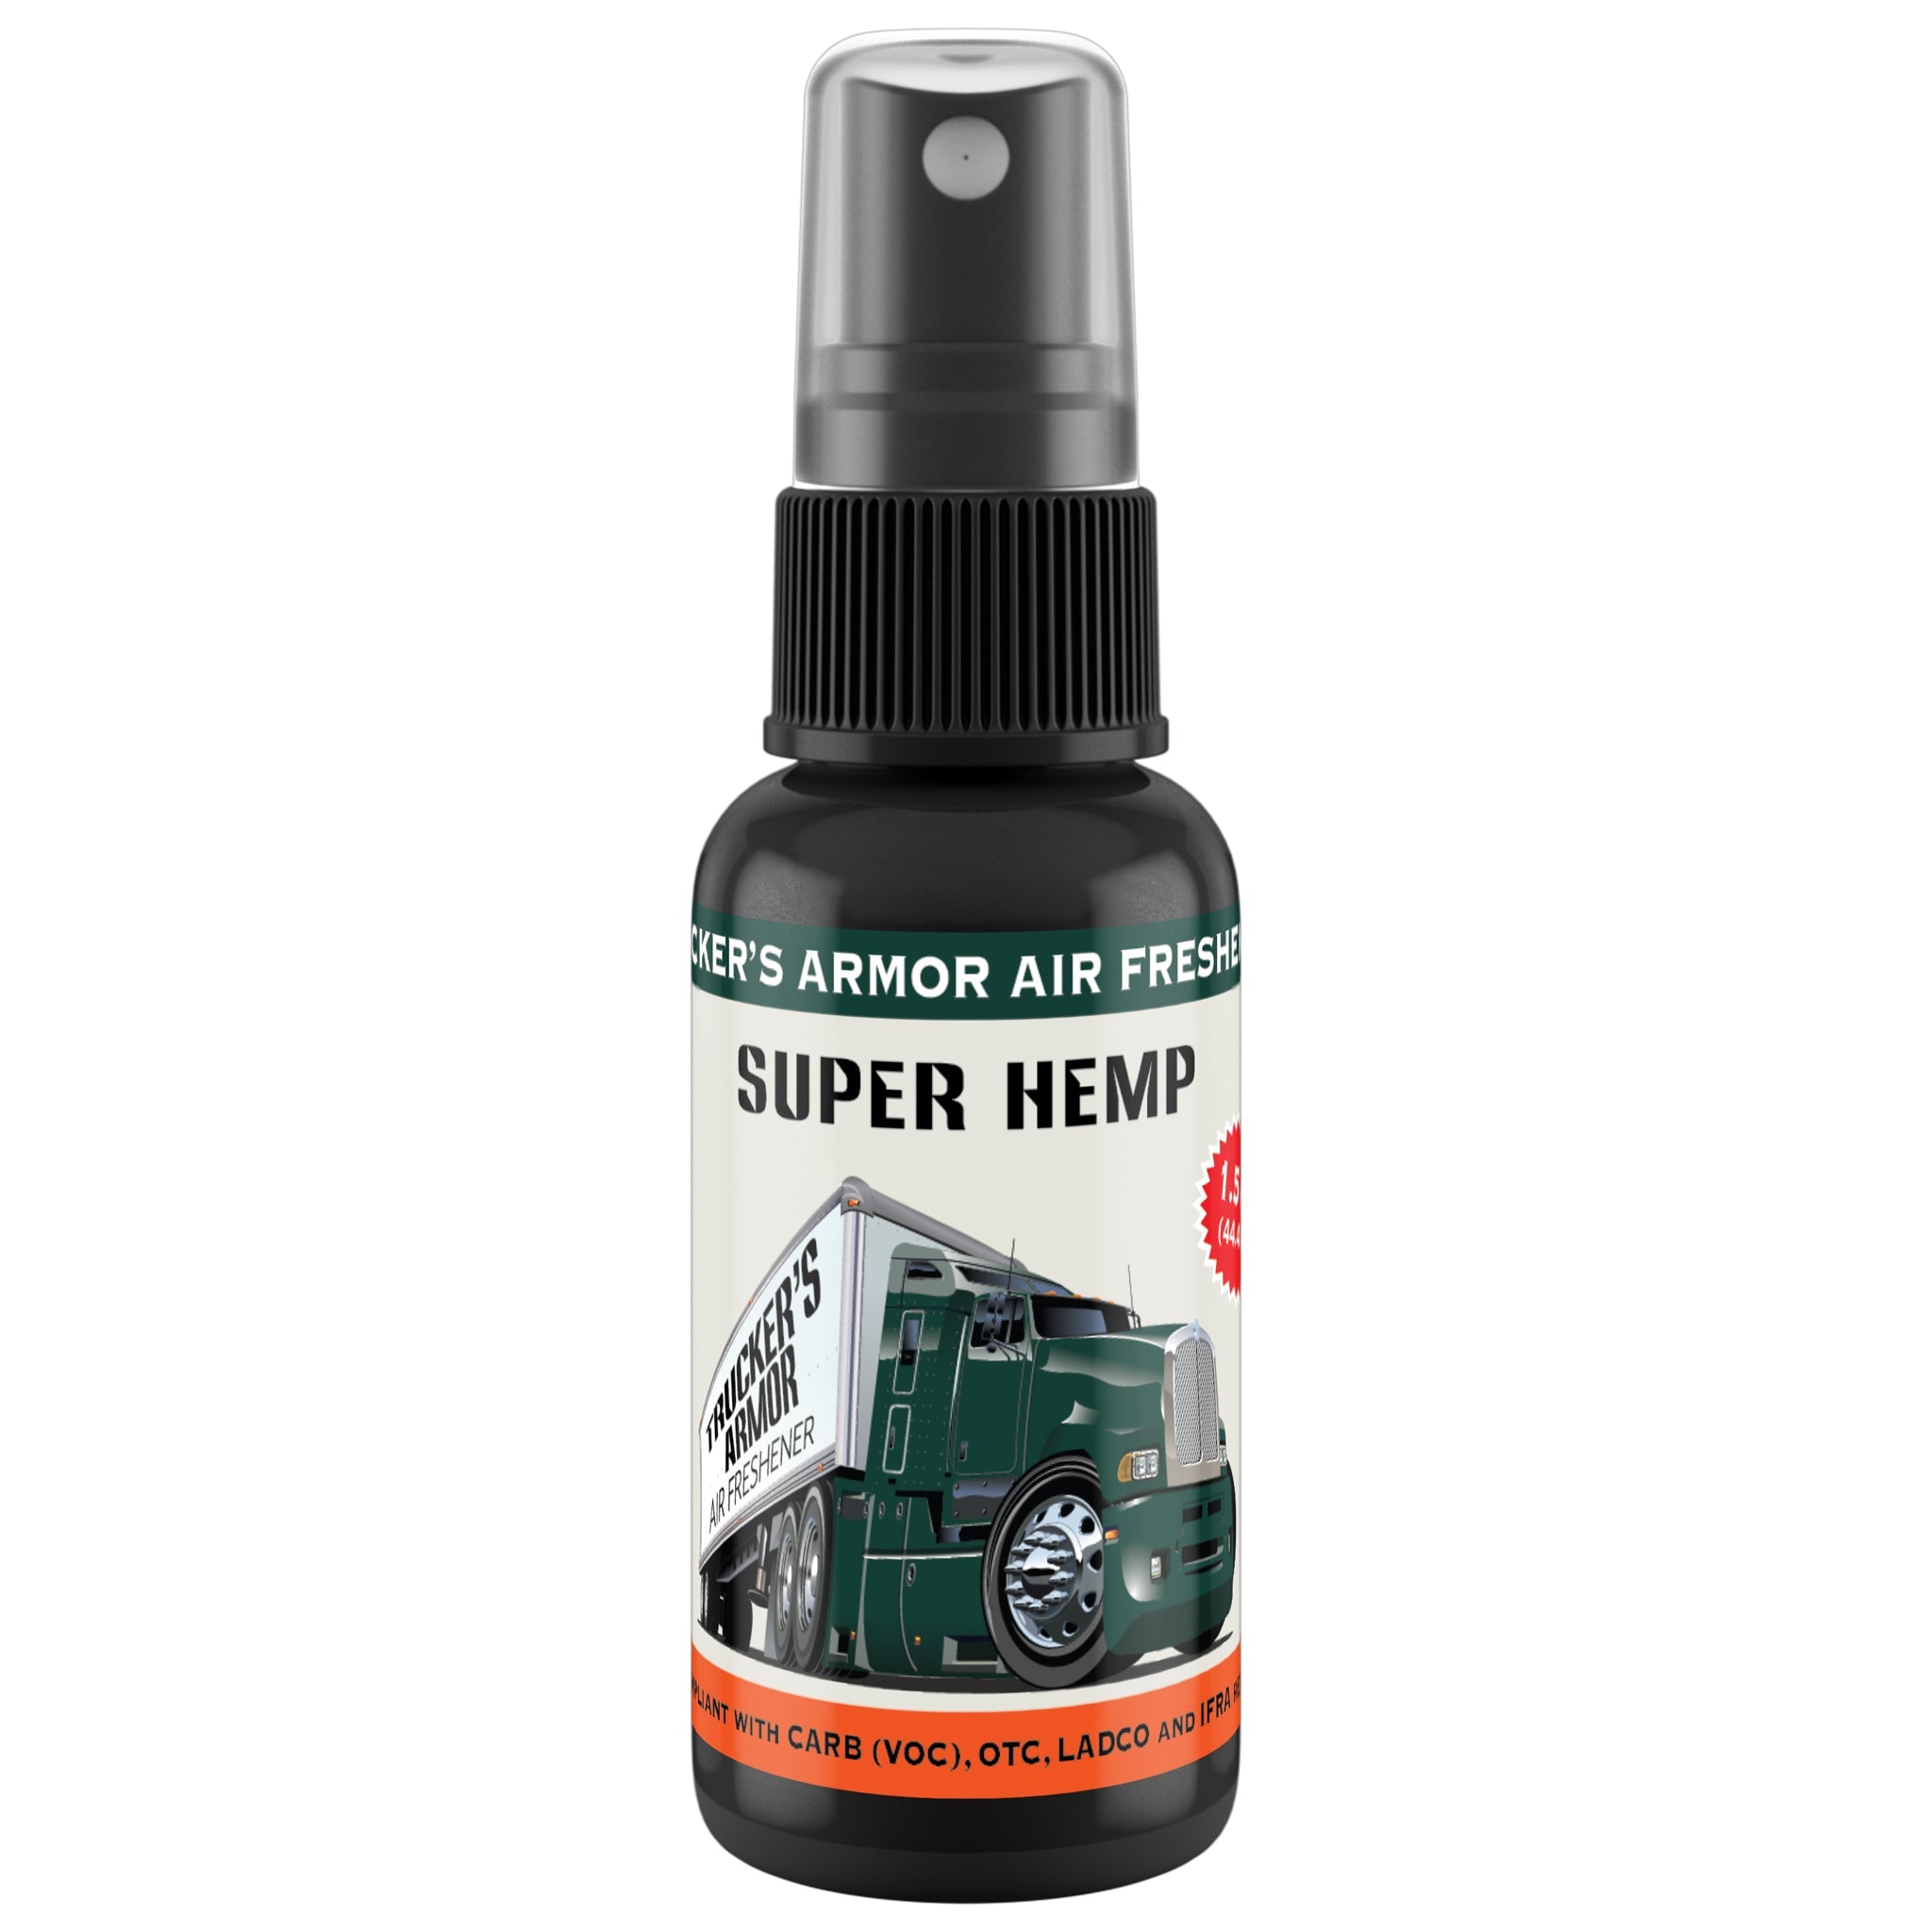 Trucker's Armor Air Freshener - Super Hemp Scent